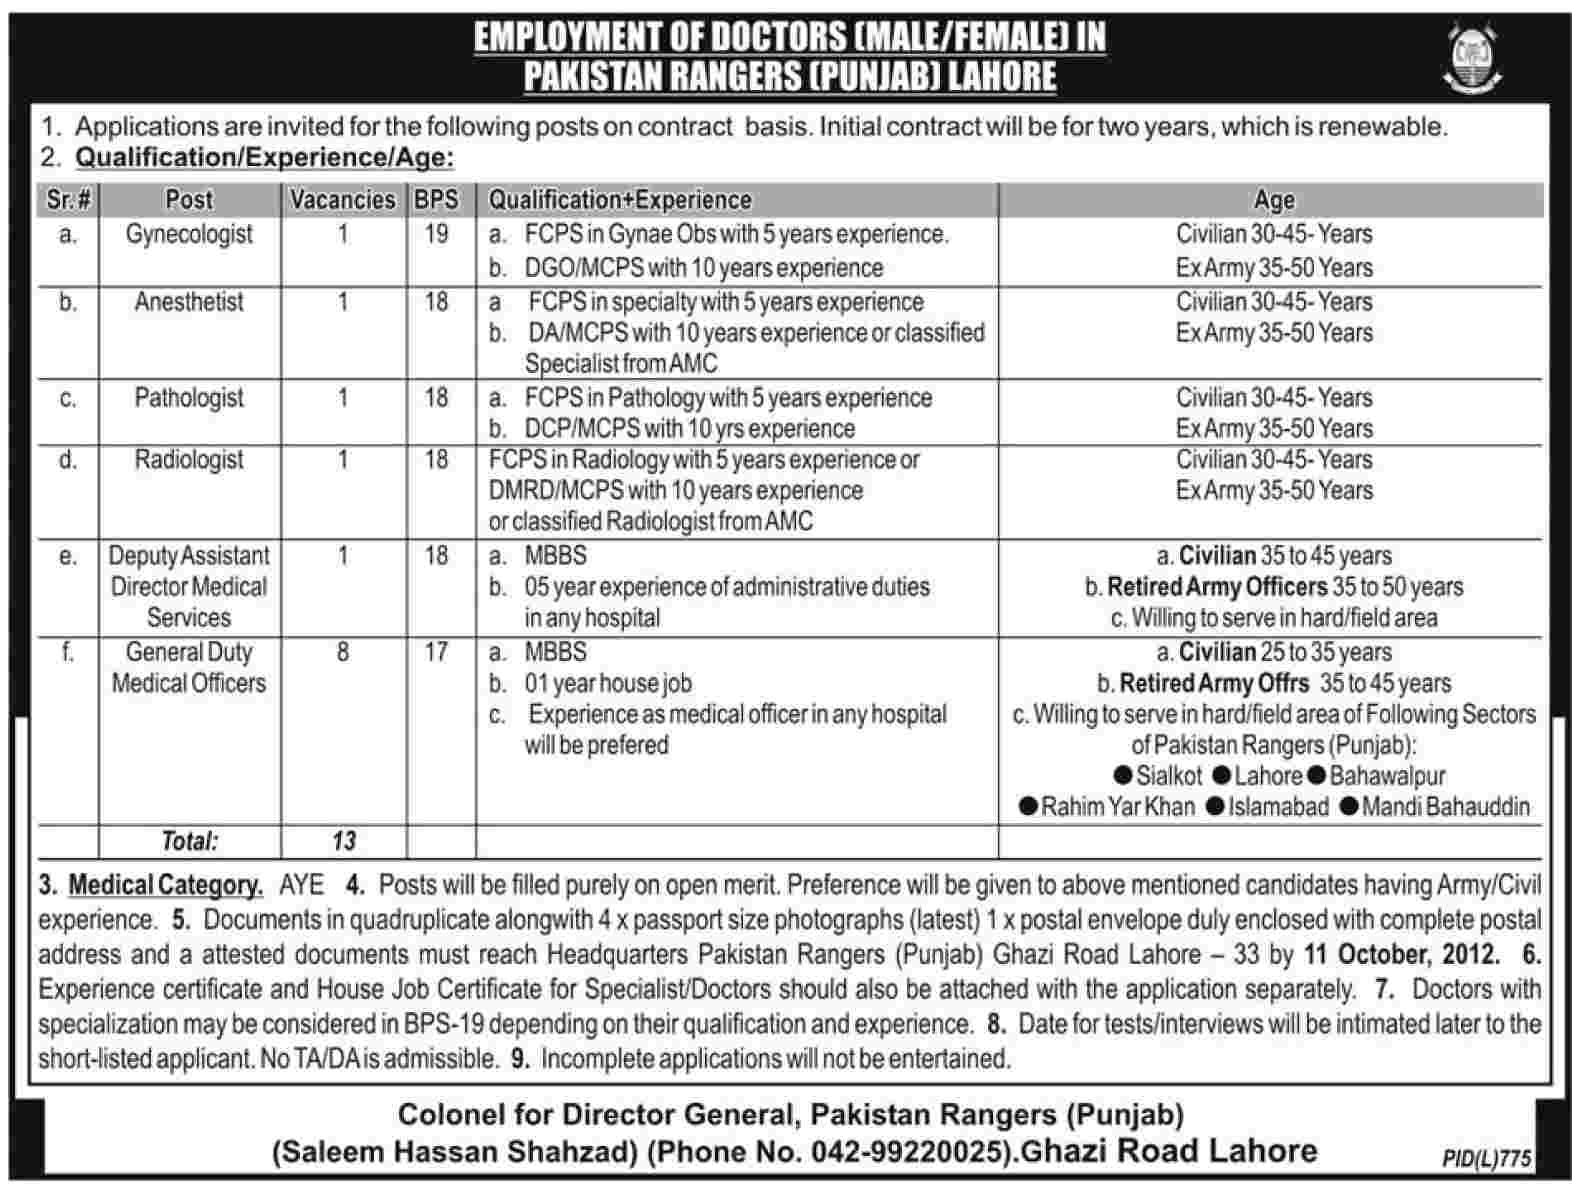 Pakistan Rangers (Punjab) Requires Medical Doctors (Government Jobs)